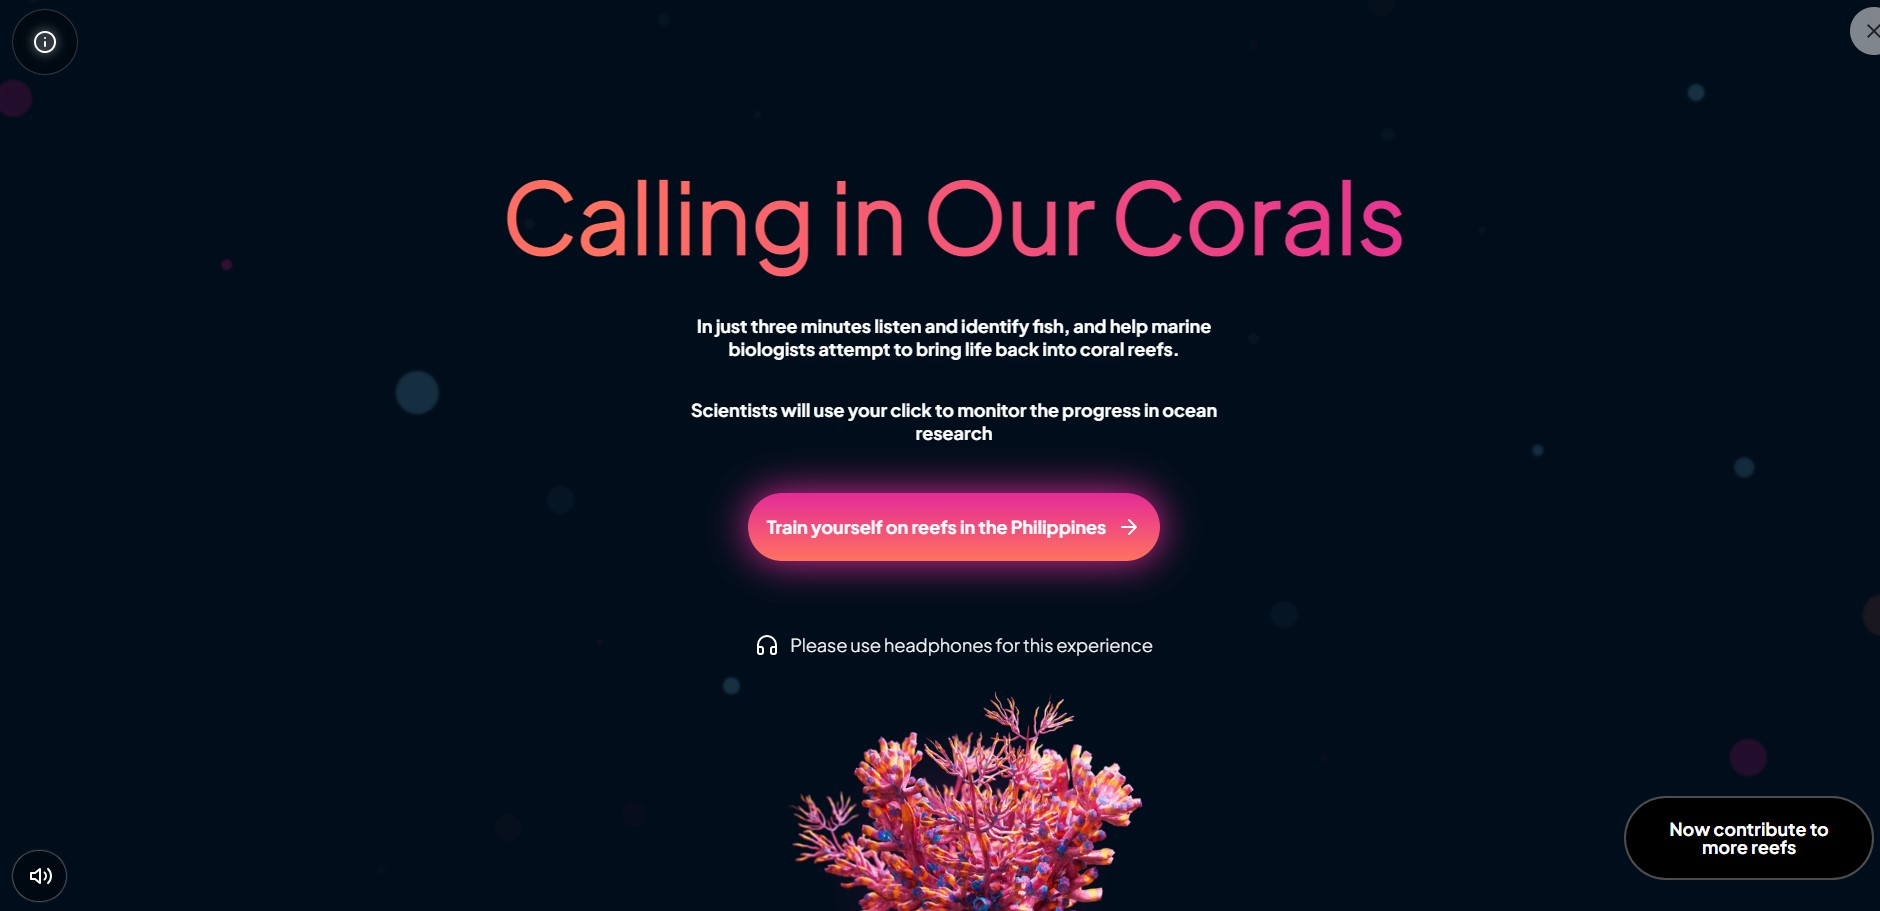 (źródło: Calling in Our Corals)